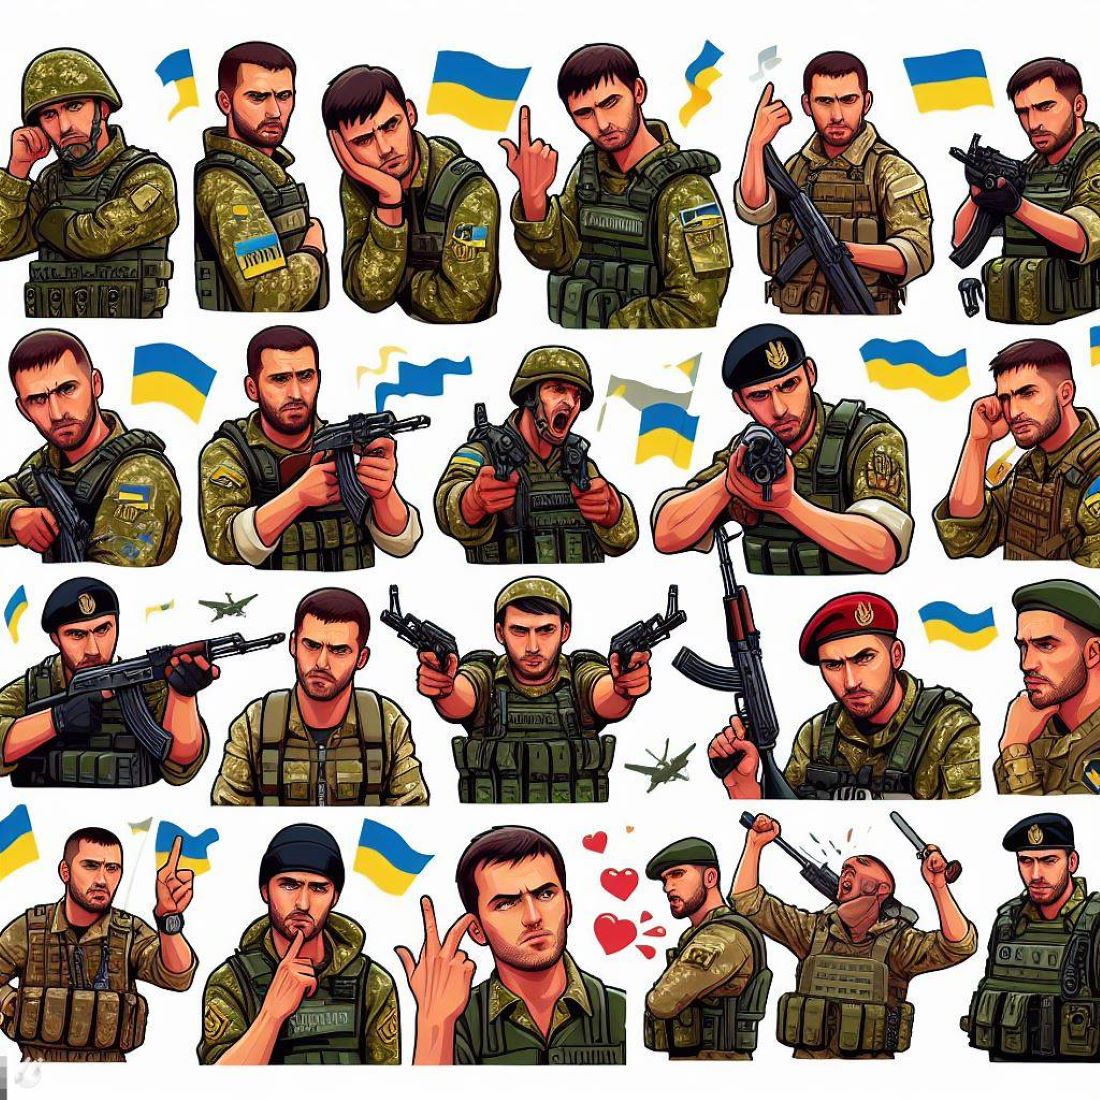 Ukrainian army cover image.